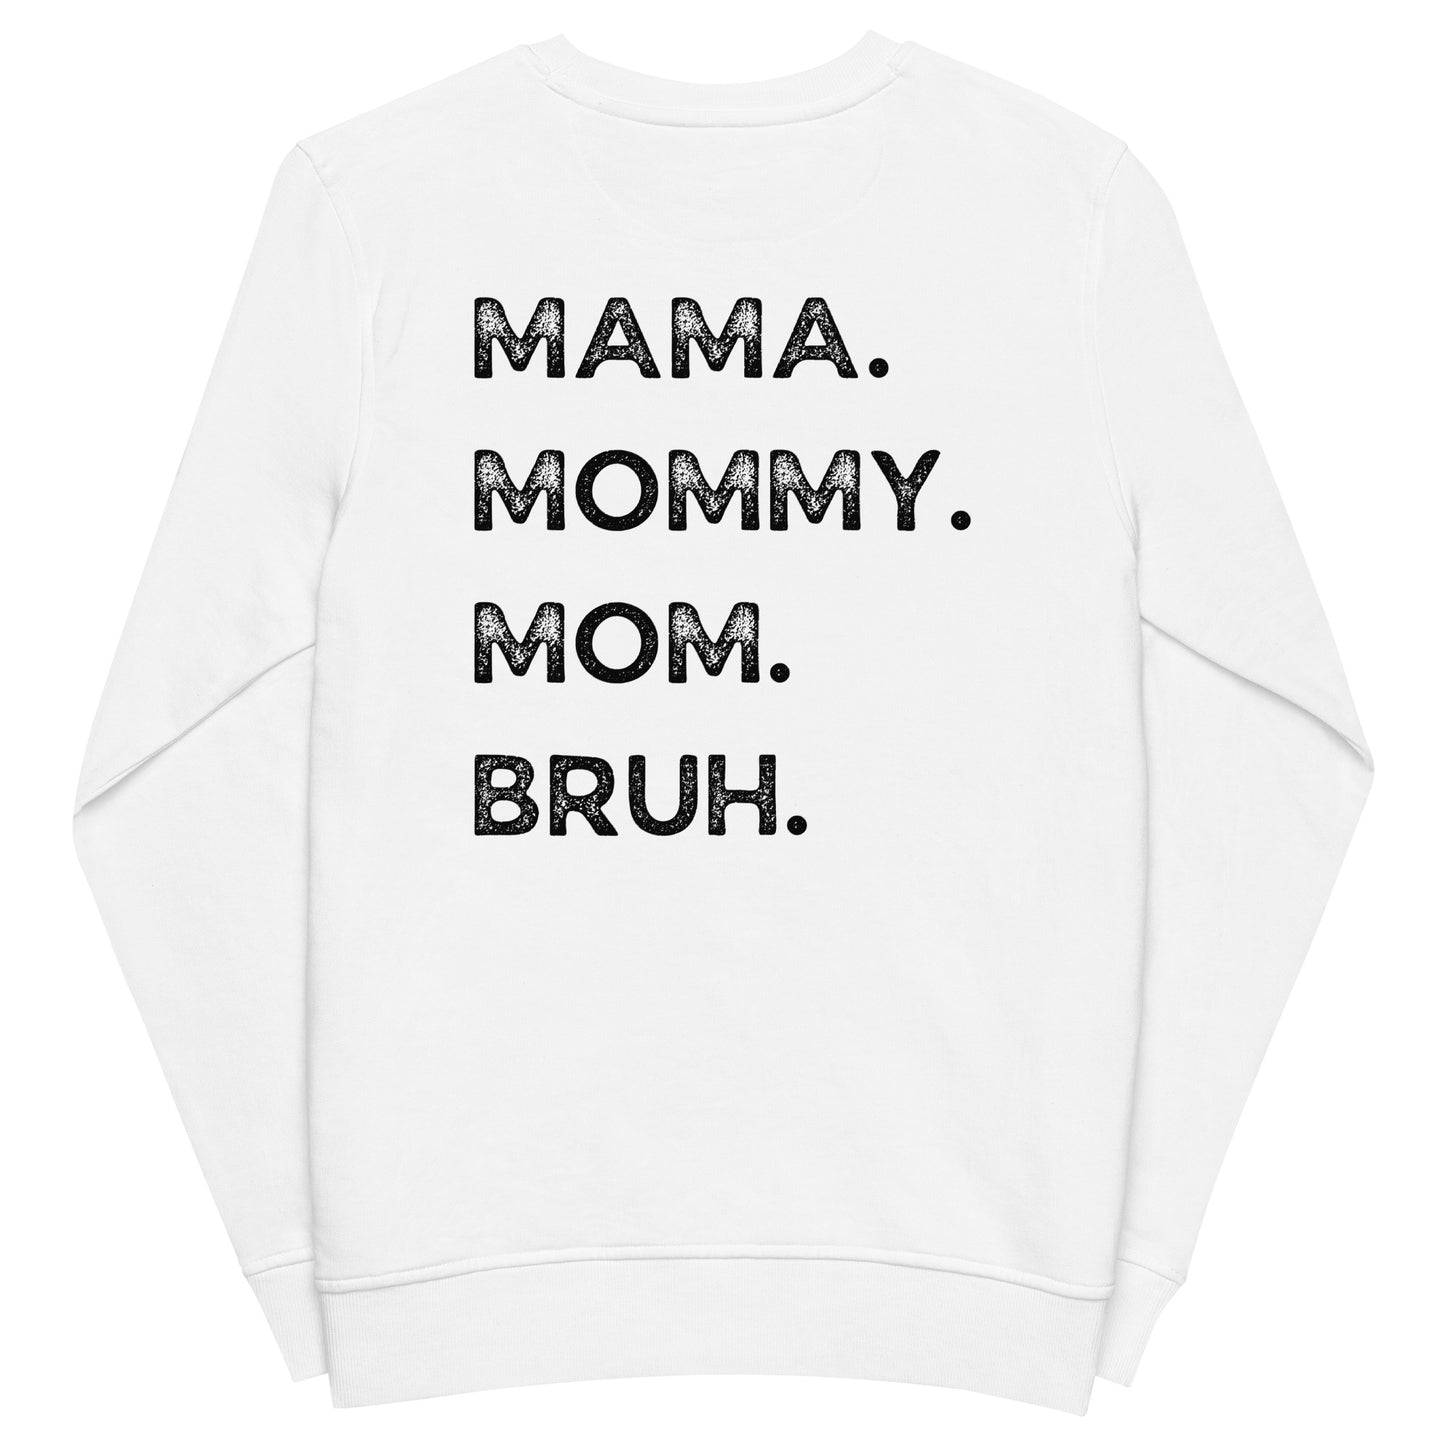 Soccer Mom Organic Sweatshirt